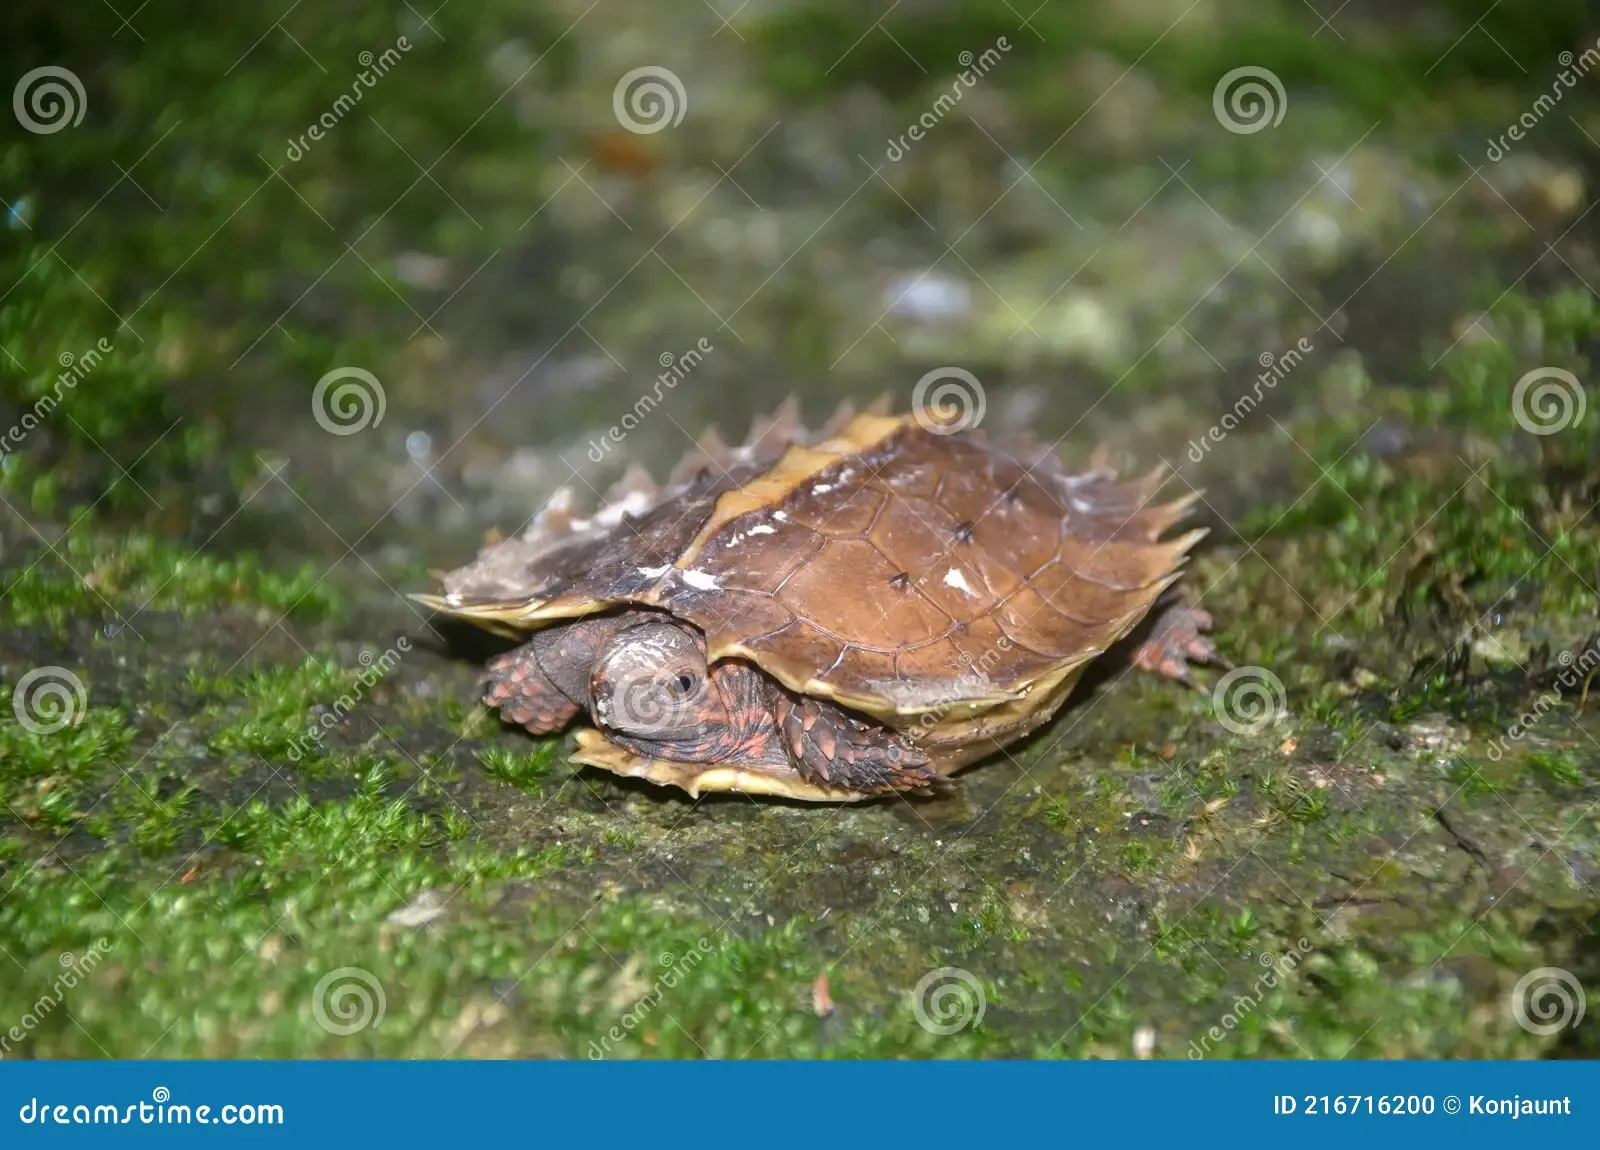 spiny-turtle-heosemys-spinosa-rock-green-moss-terrapin-cogwheel-wildness-forrest-rain-thailand-216716200.jpg